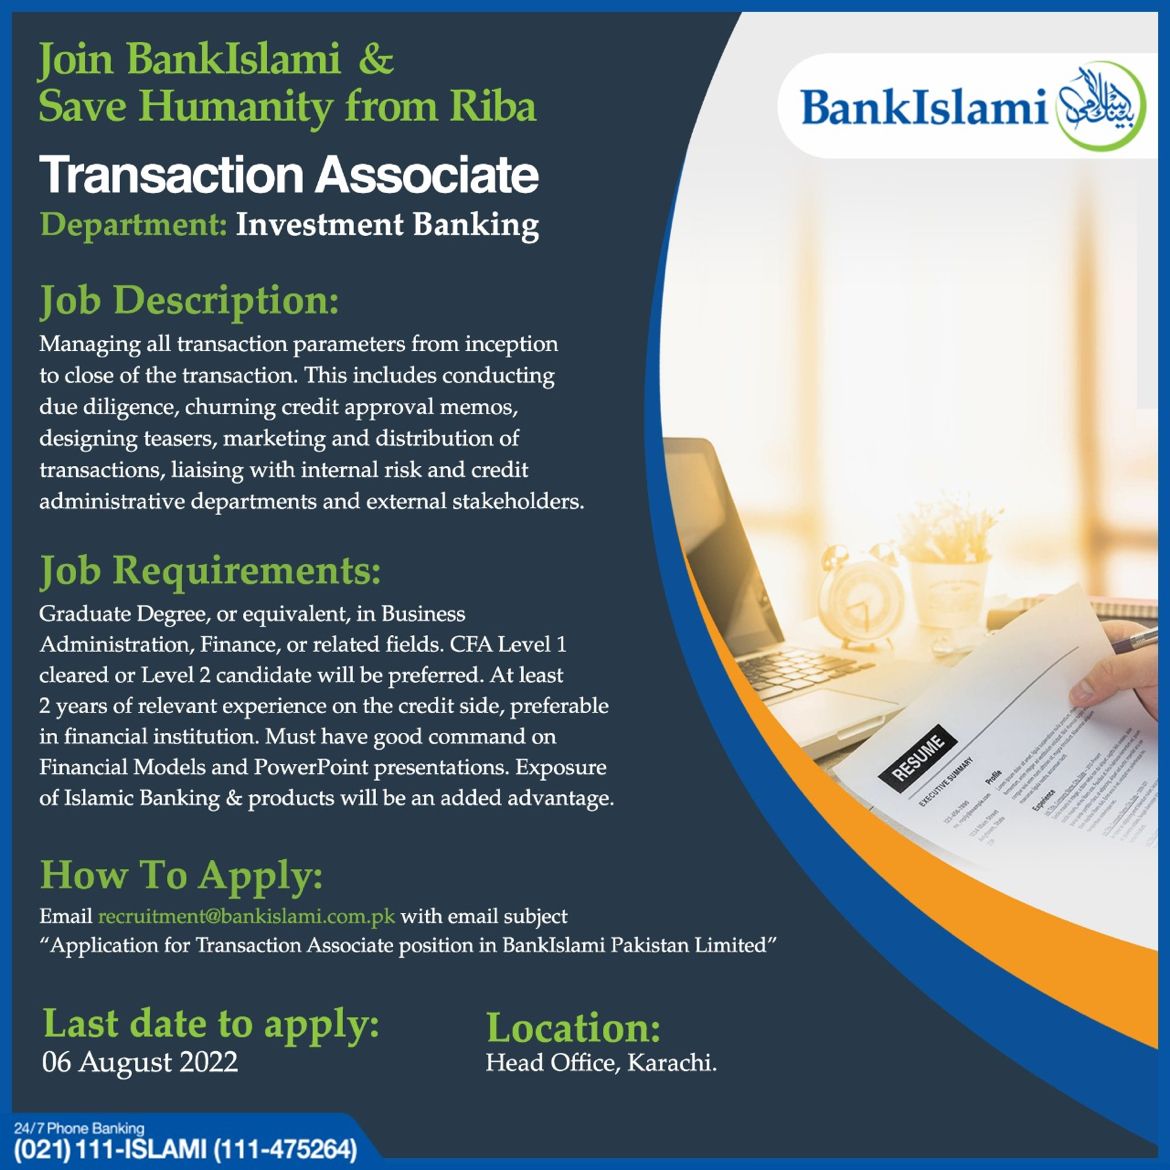 Bank Islami Pakistan Jobs for Transaction Associate - Investment Banking